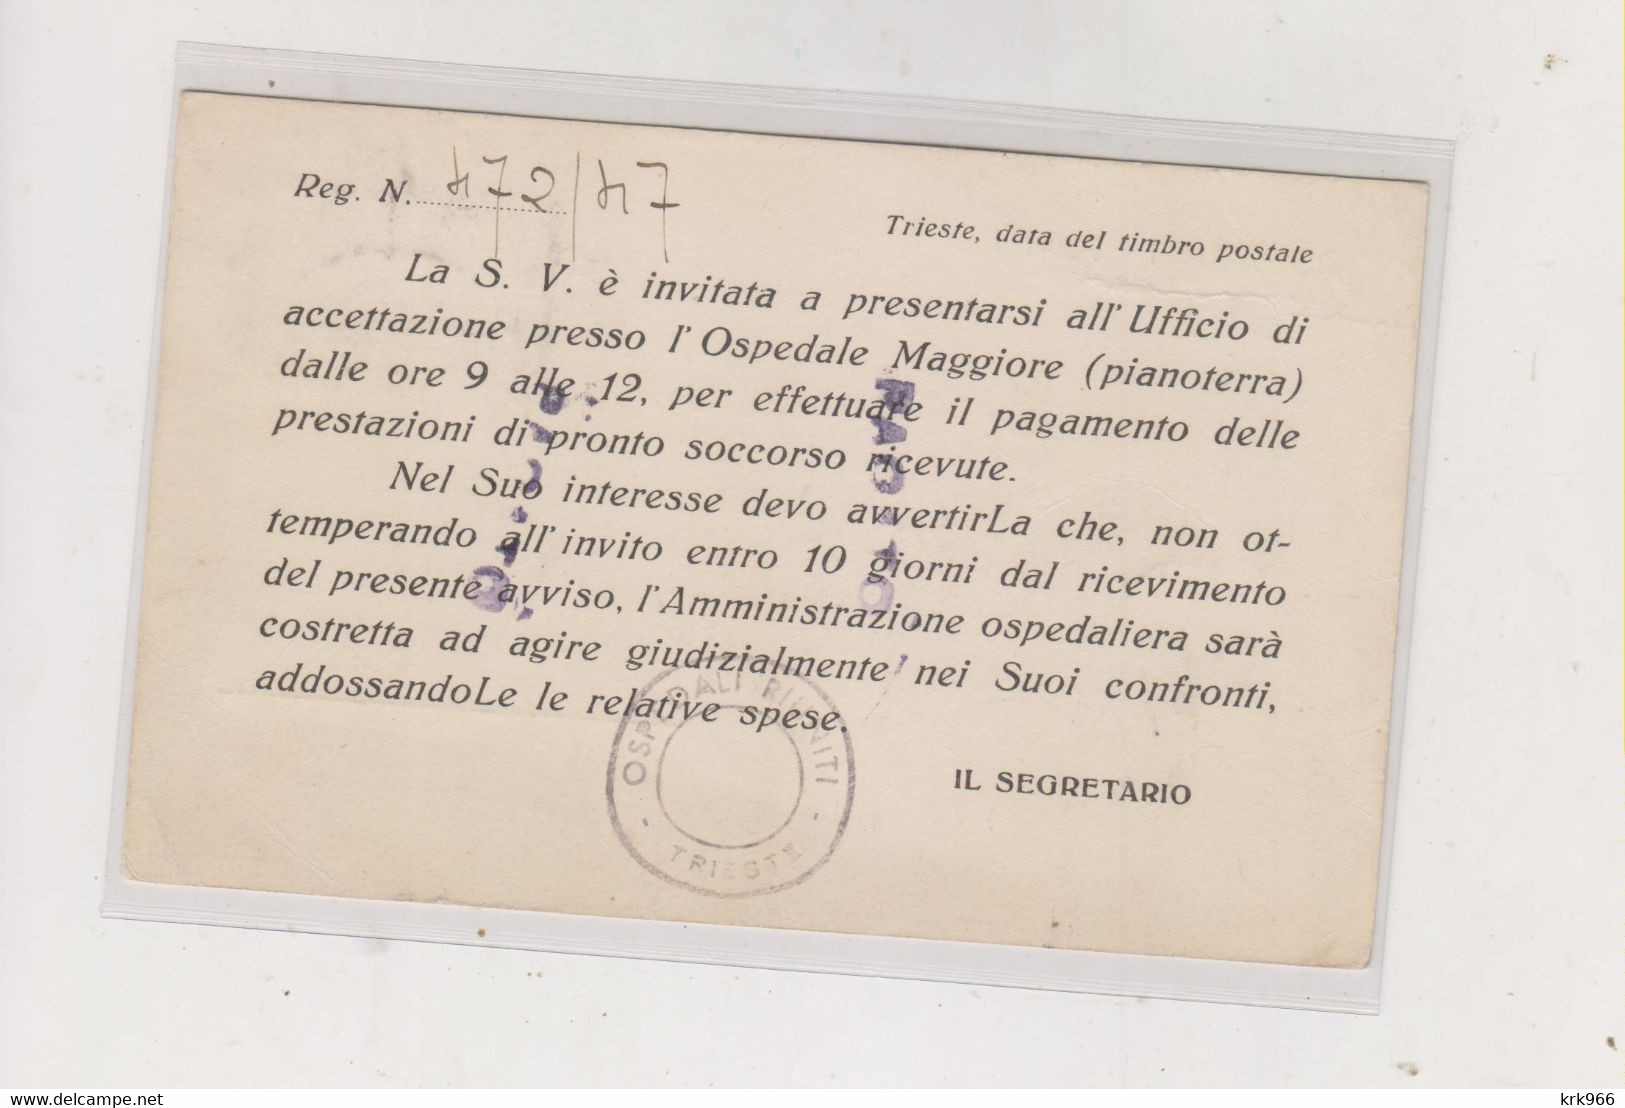 ITALY TRIESTE A 1947  AMG-VG Nice Postcard - Poststempel